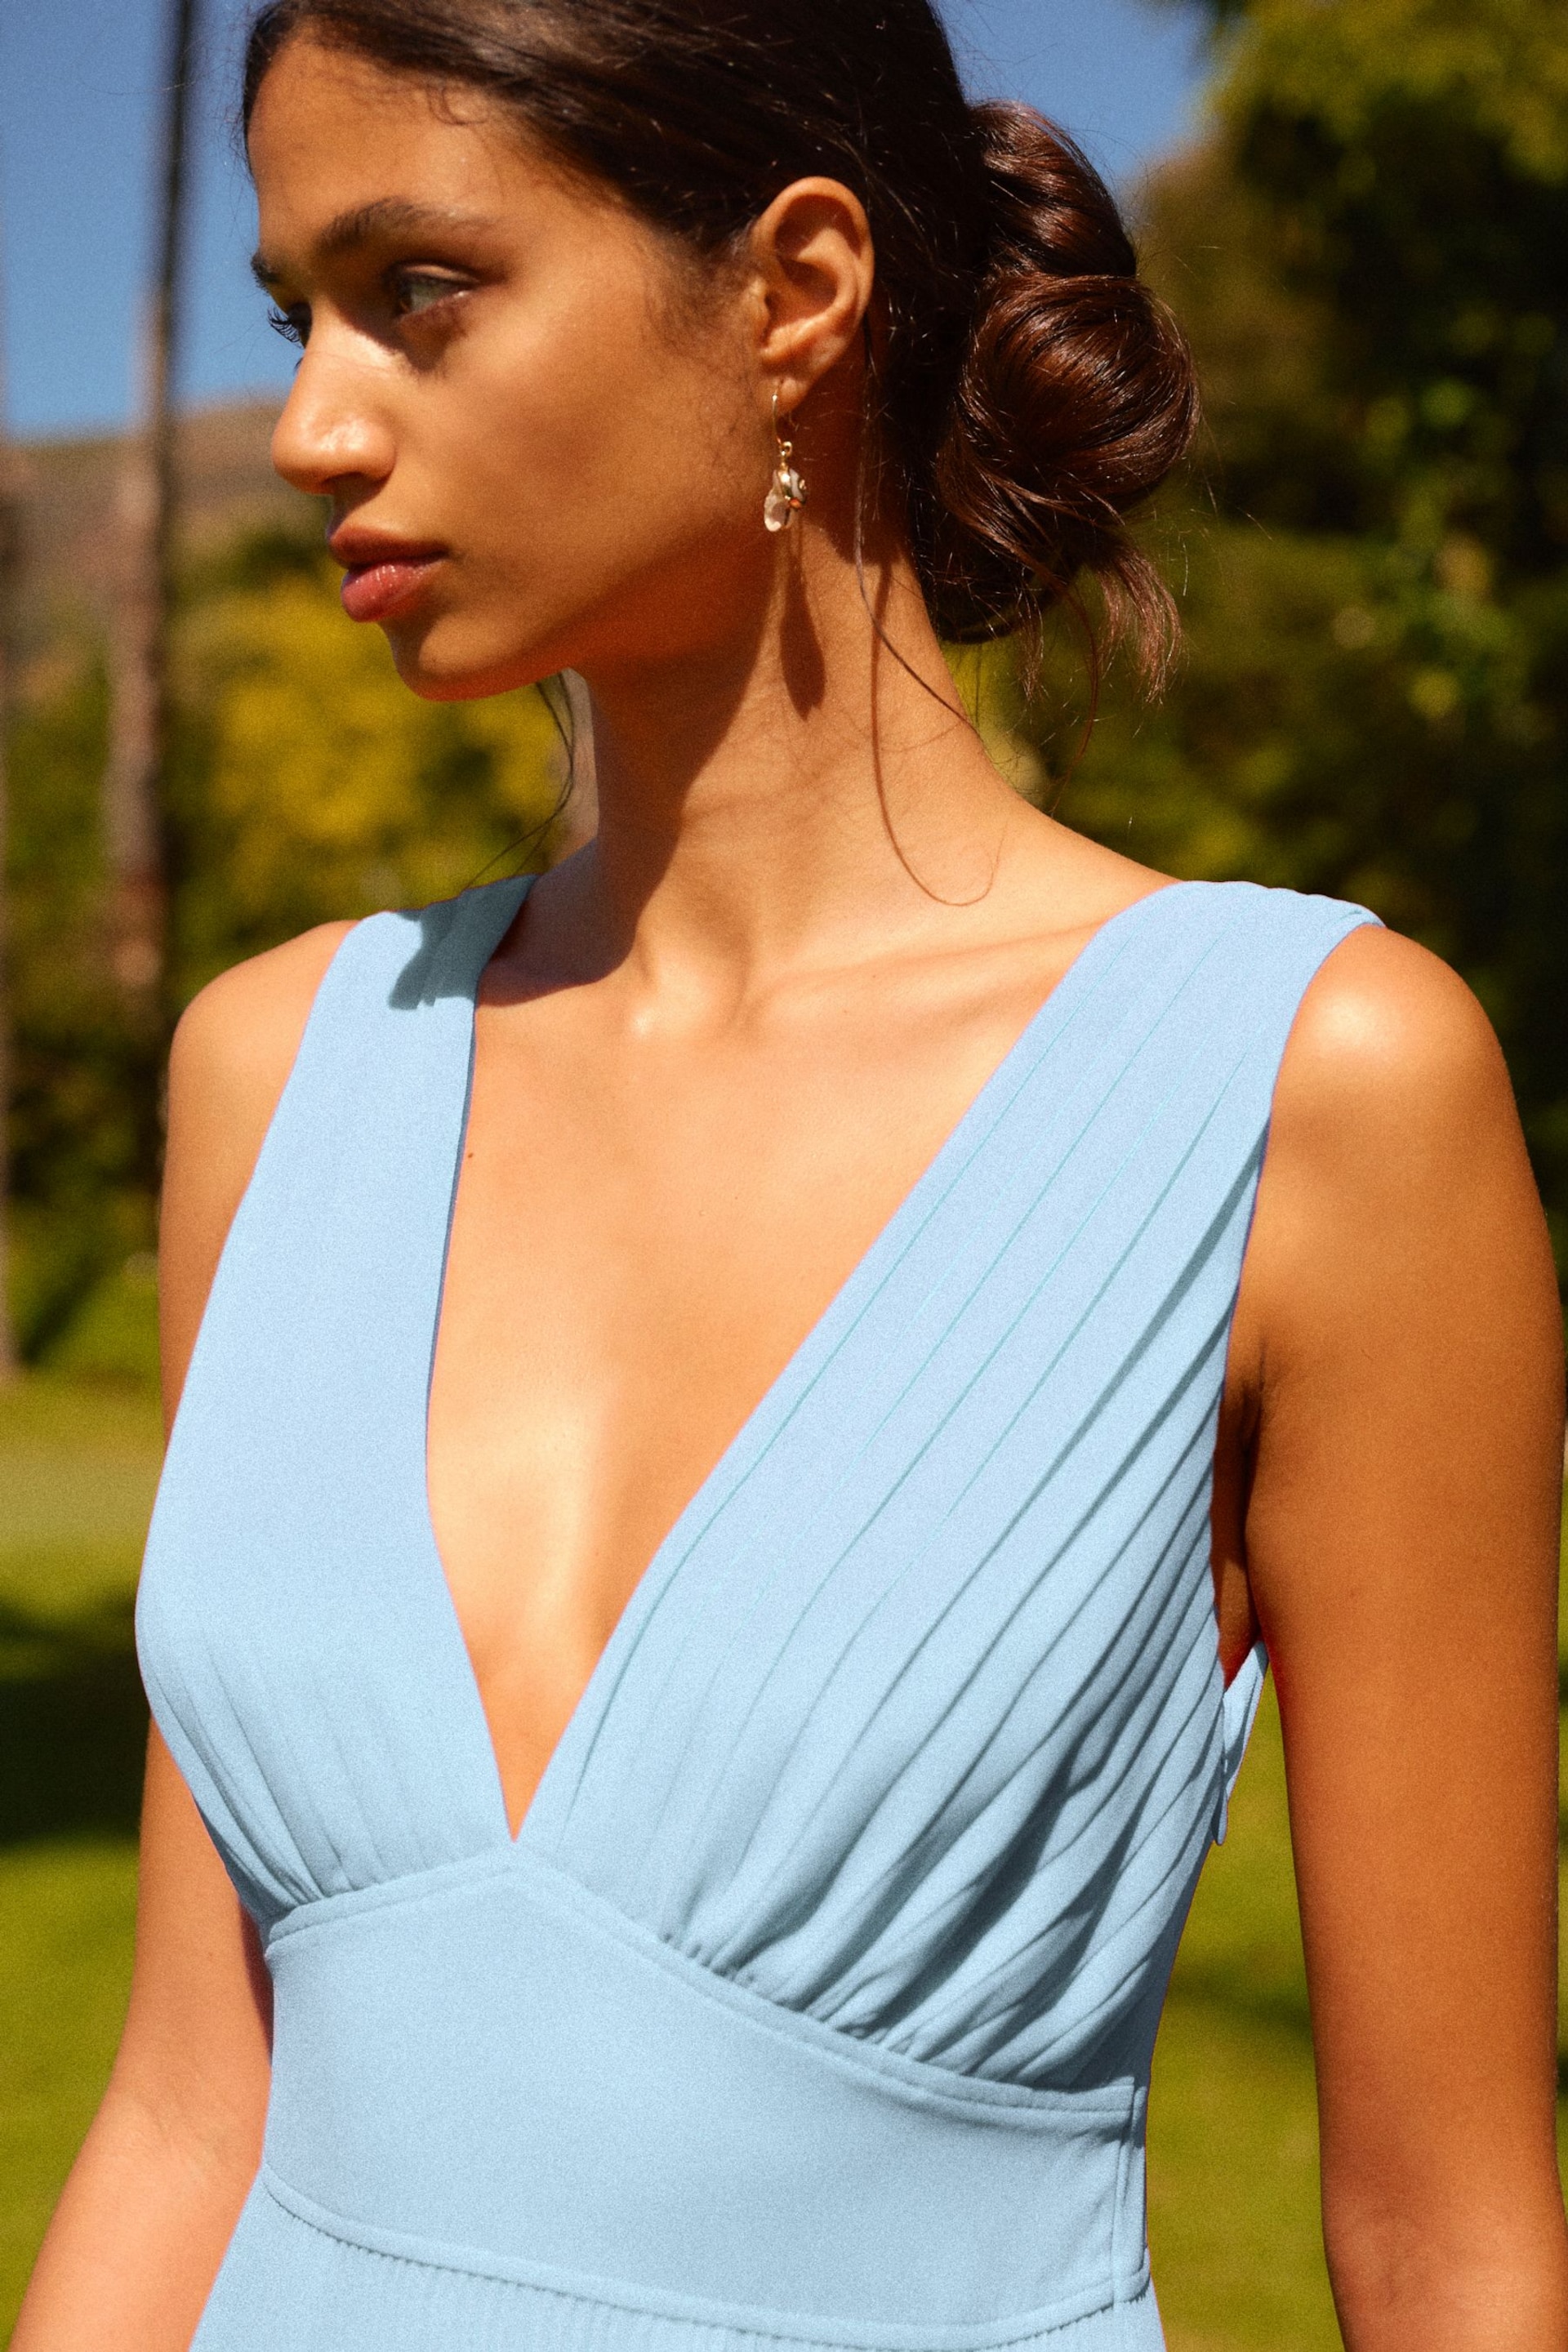 Light Blue Sleeveless V-Neck Plisse Tiered Maxi Dress - Image 4 of 6